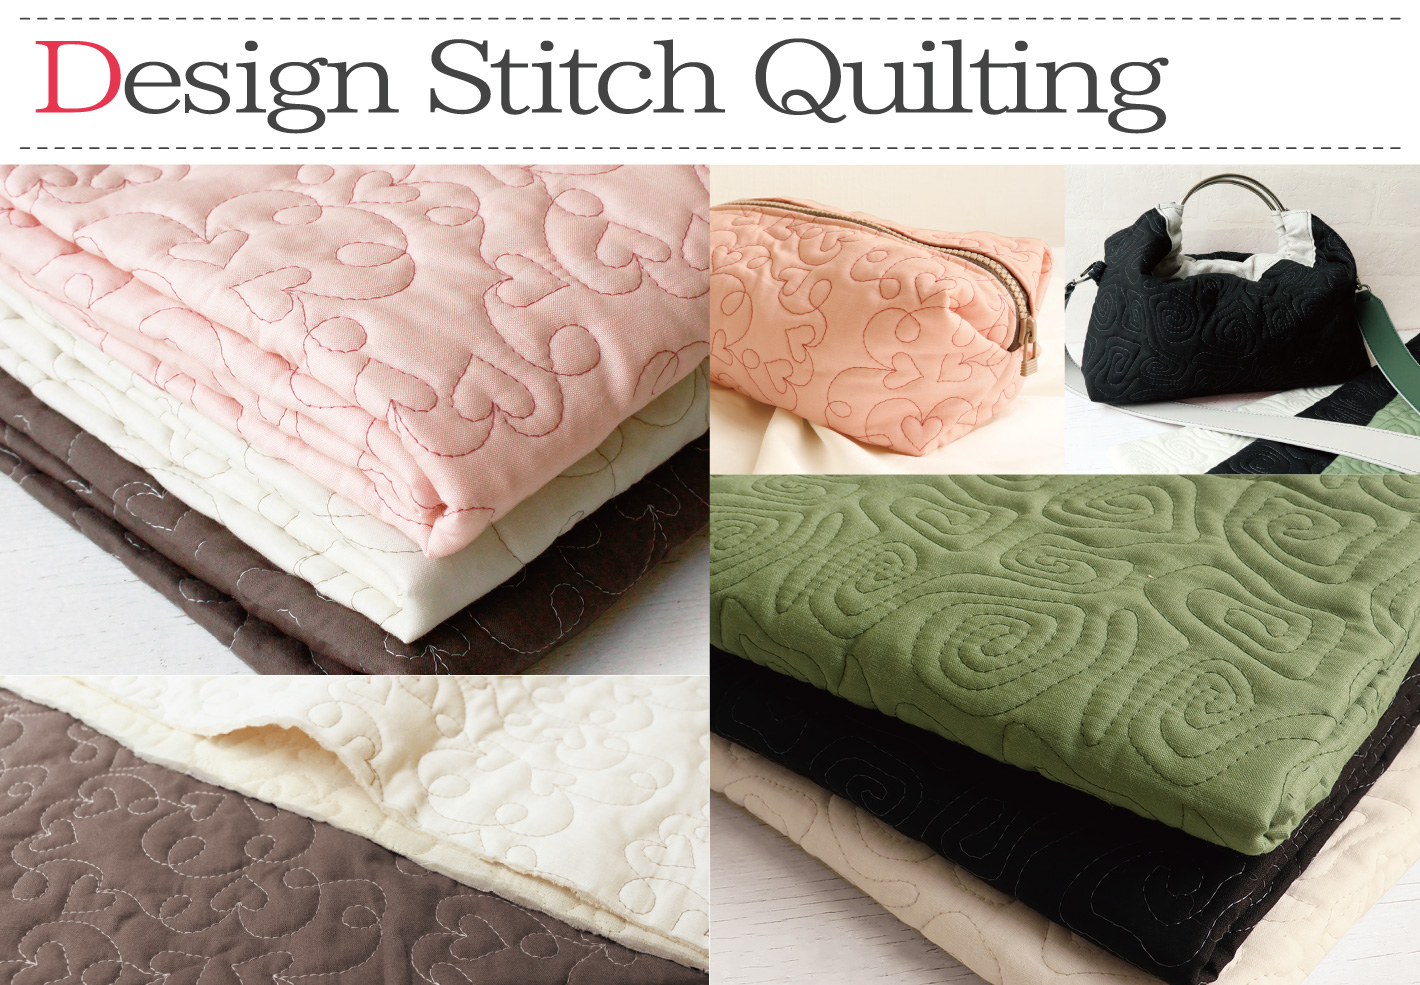 Design stitch quilting